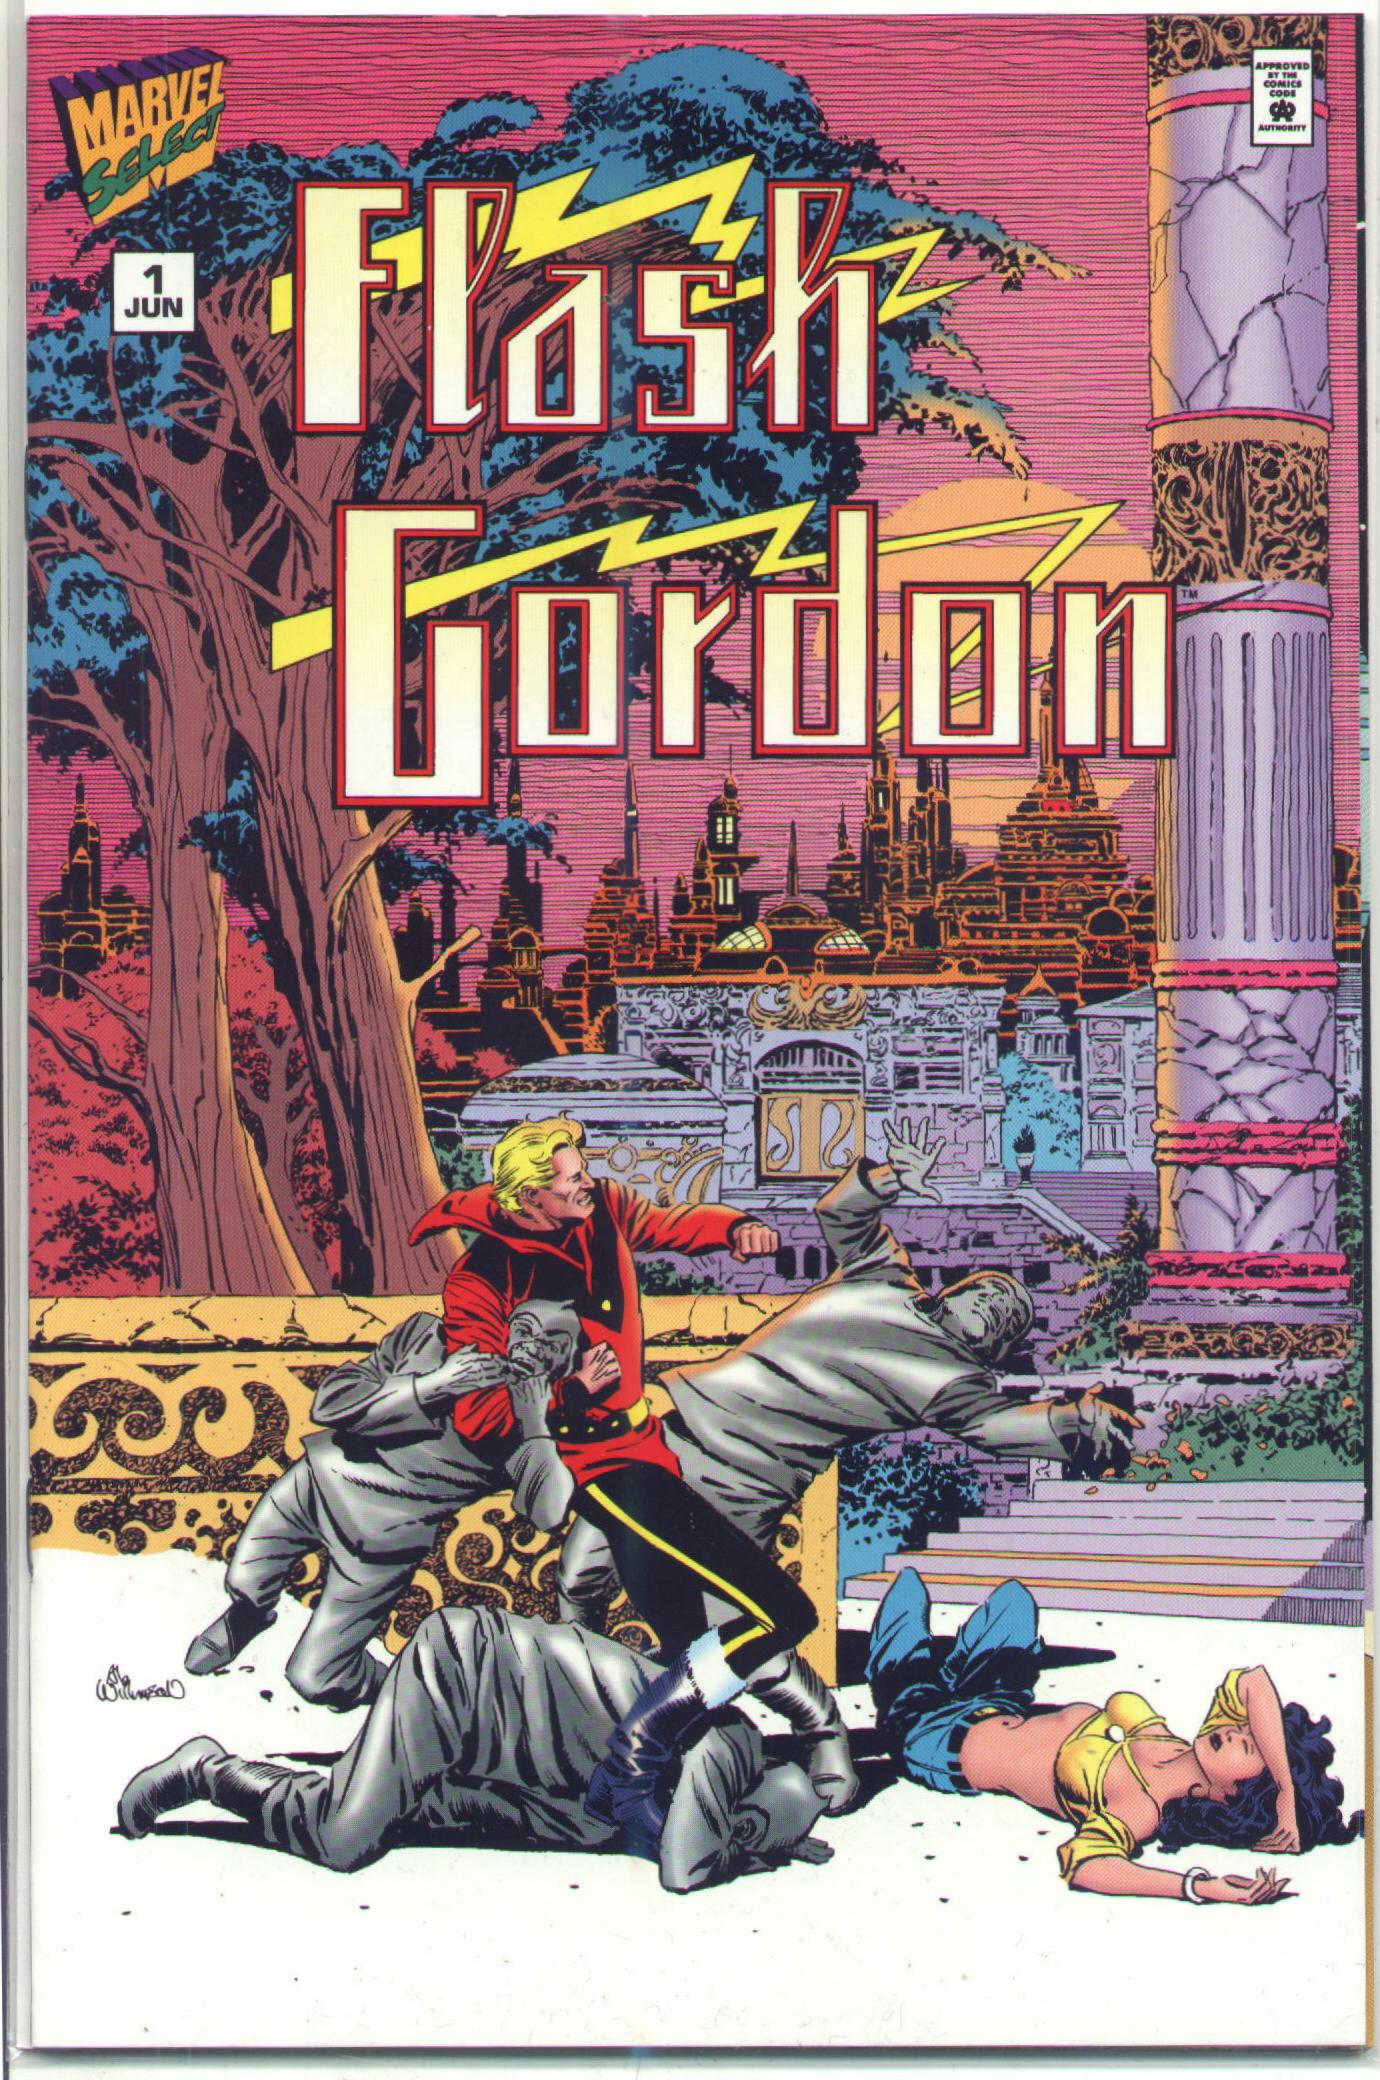 Flash Gordon Vol. 1 #1